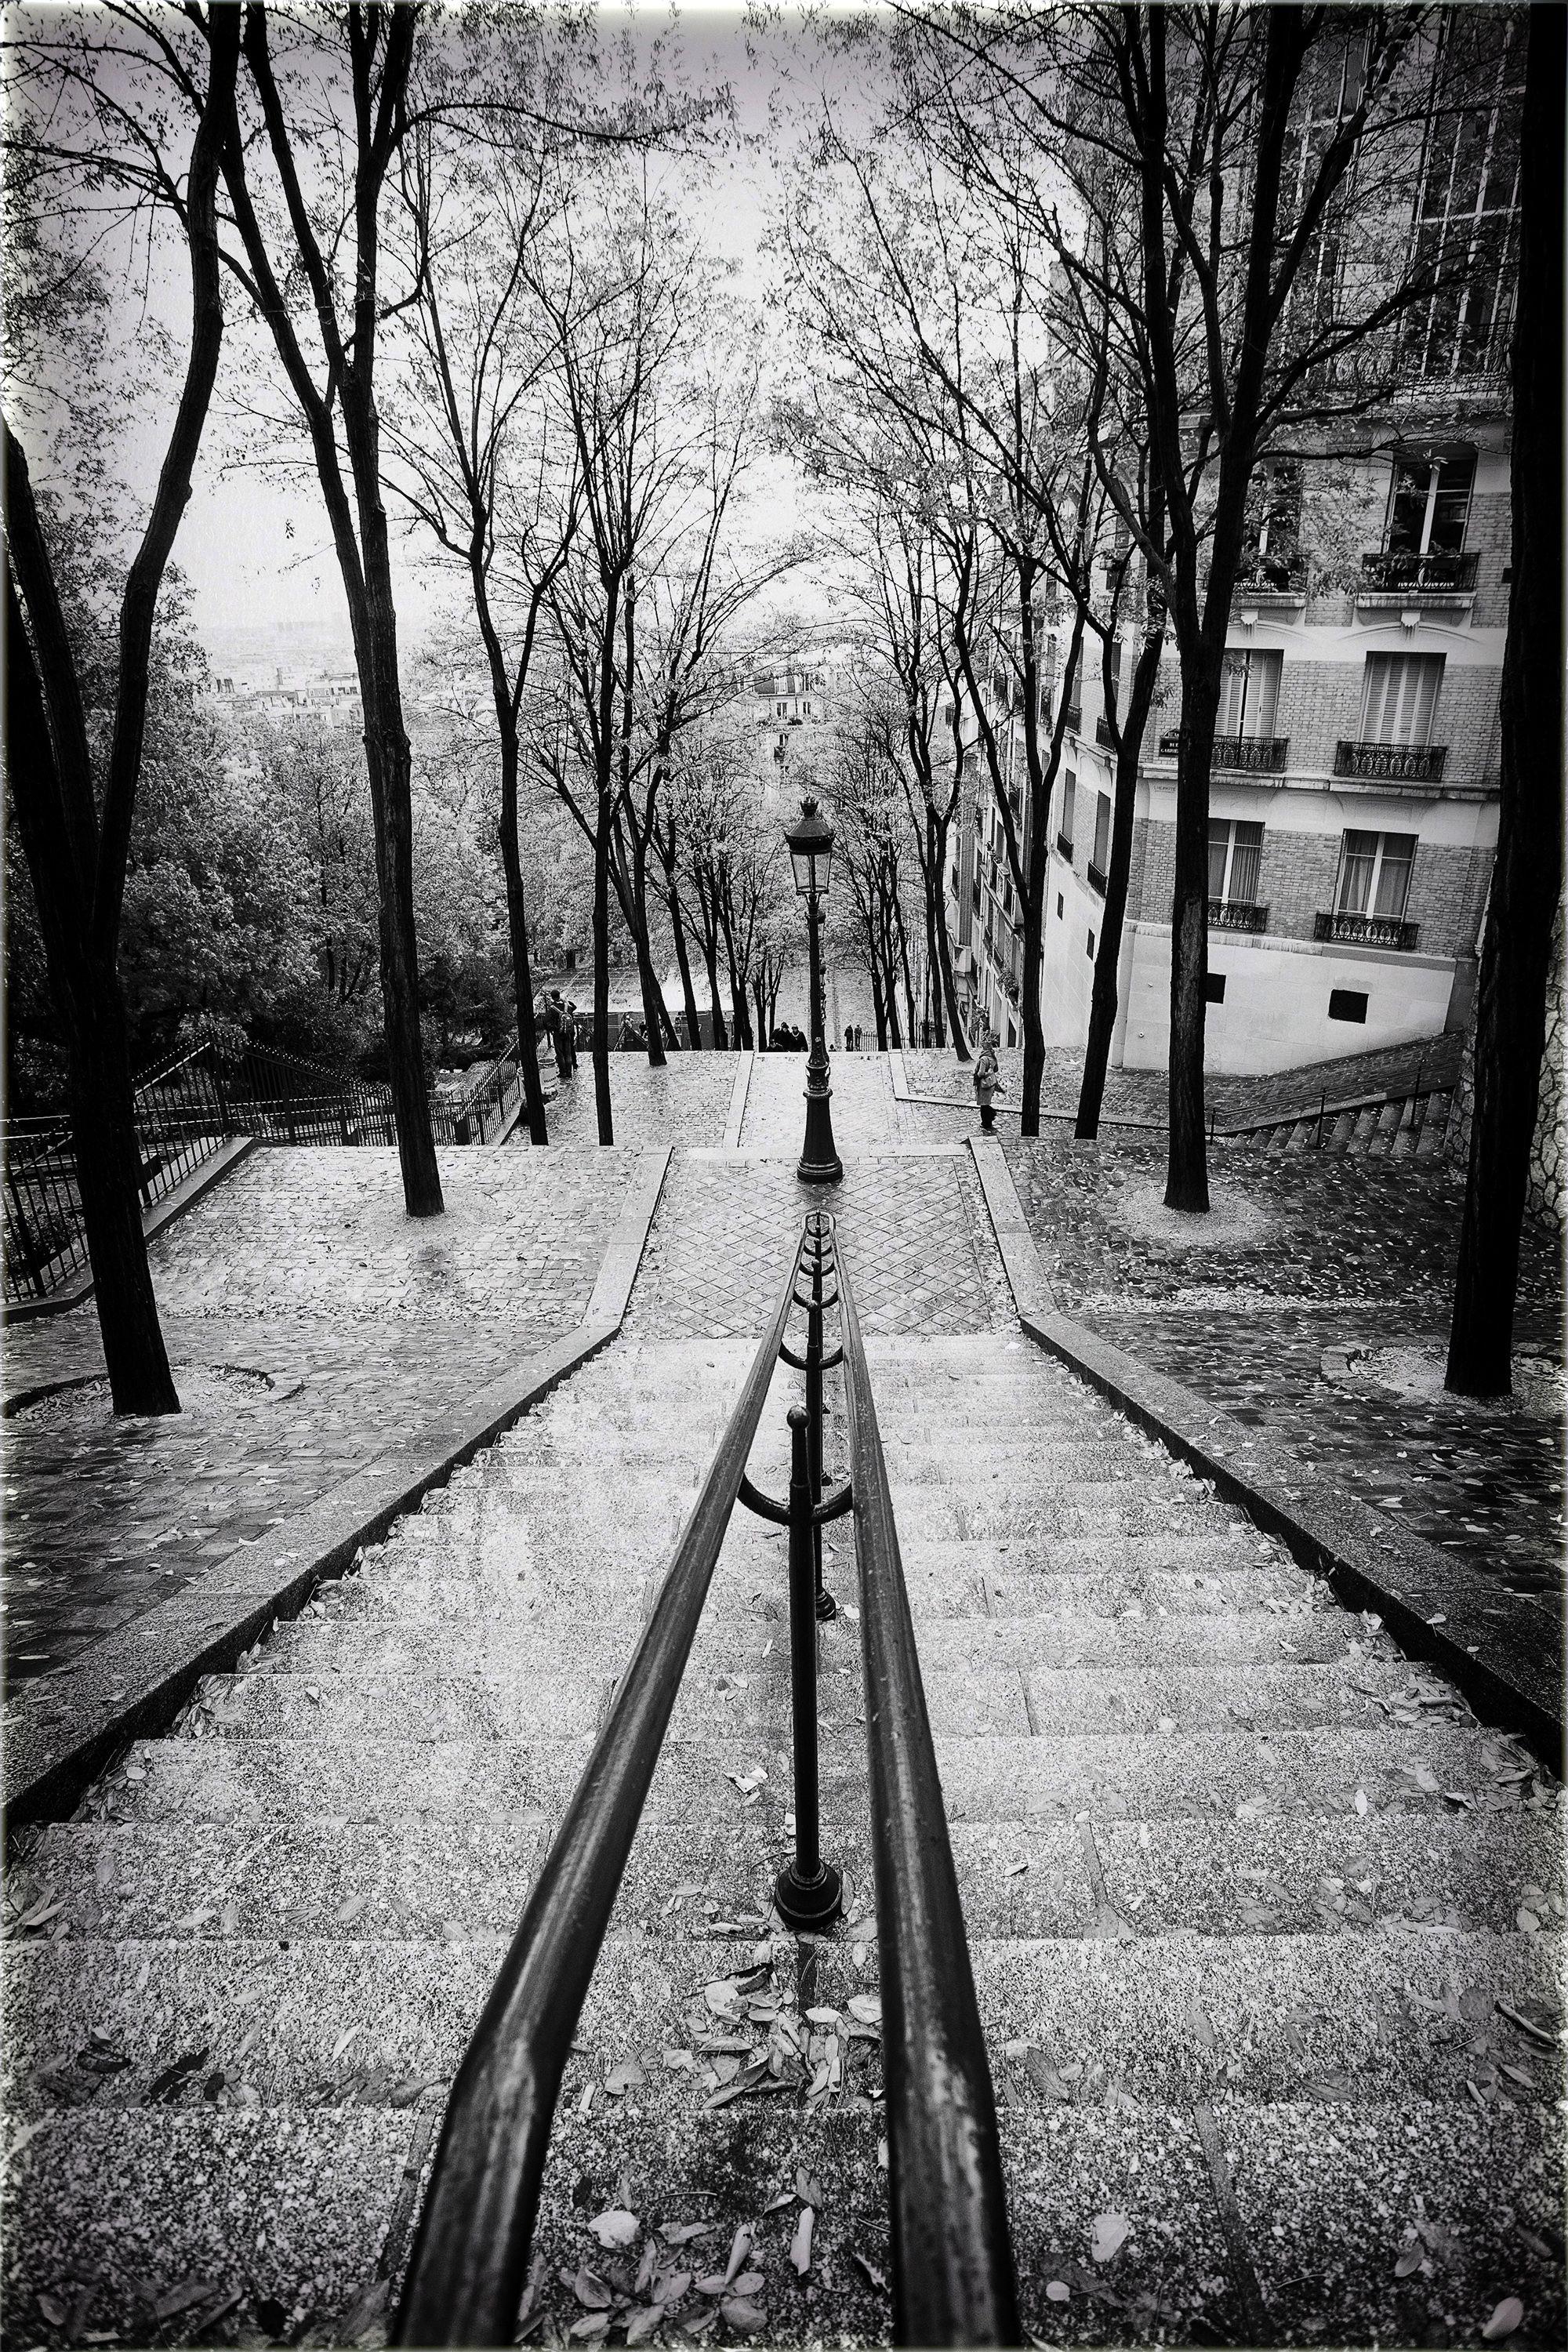 Fikry Botros Black and White Photograph – Monmartre, Fotografie, Archivtinte- Jet